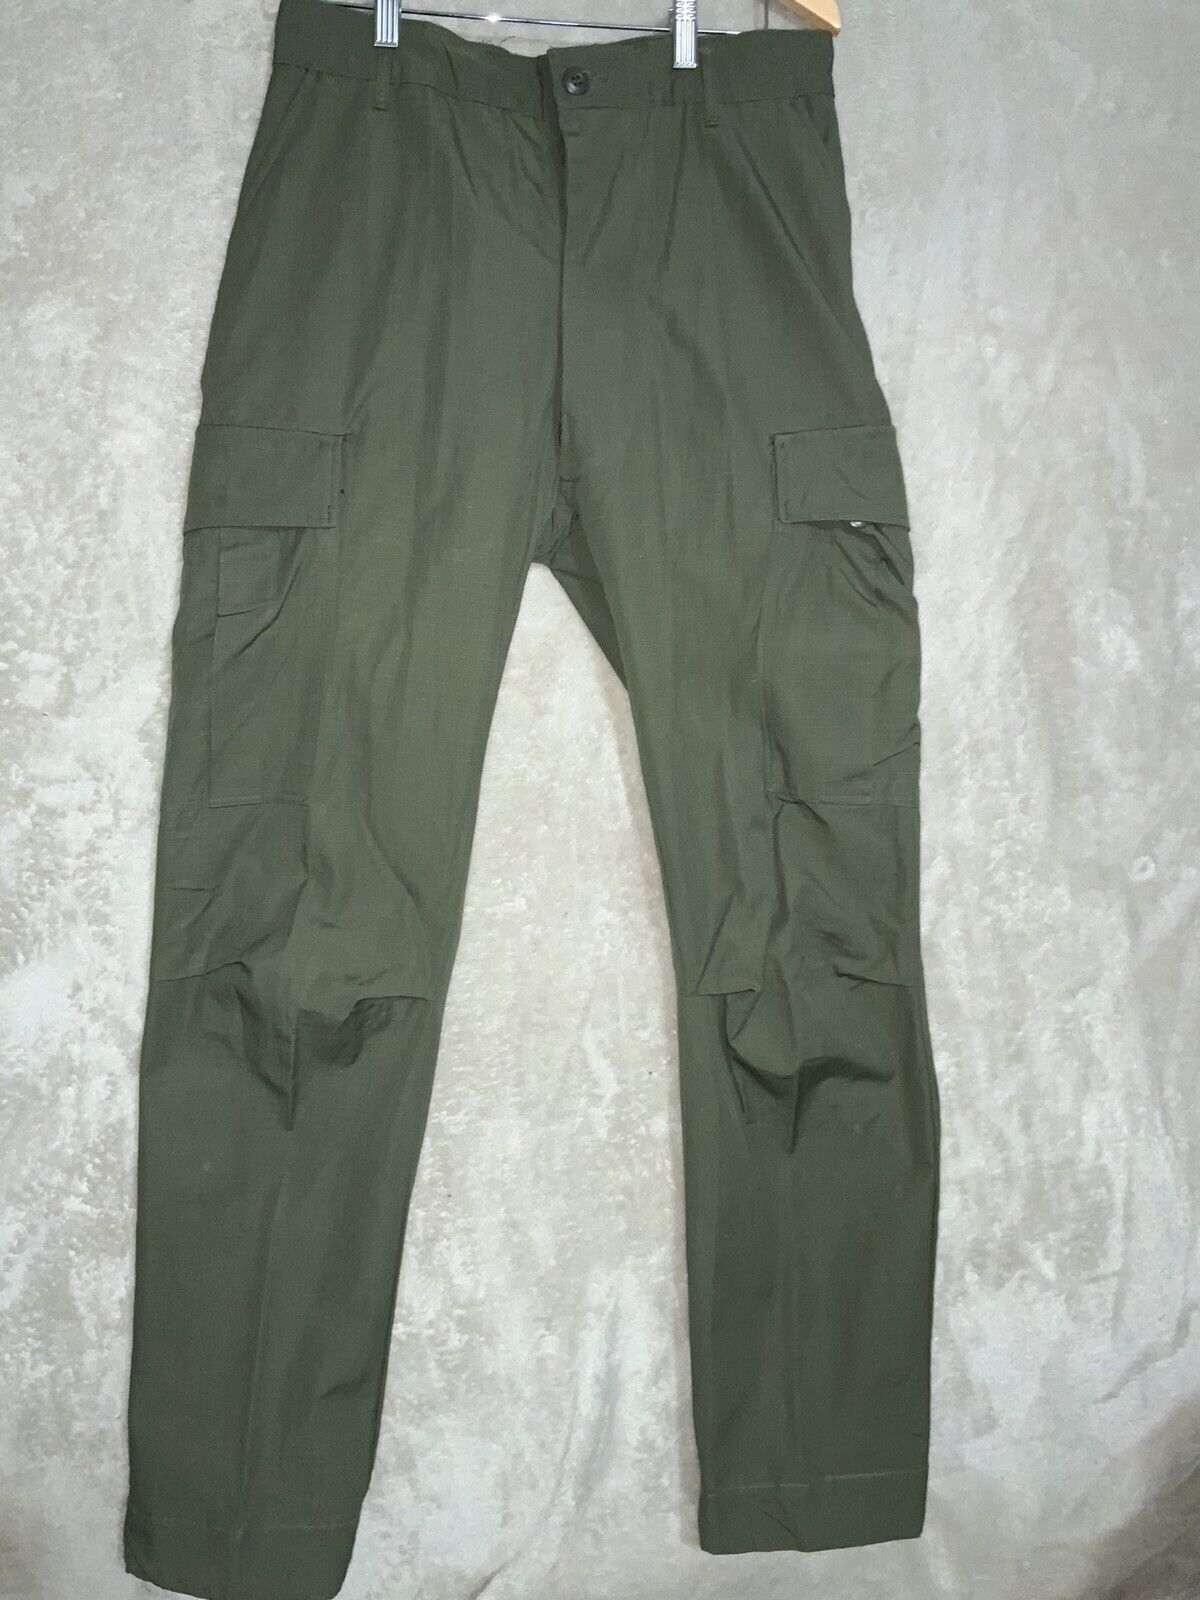 VINTAGE 70s Vietnam US Army Cold Weather Field Trousers Pants Men's OG 107 30x32